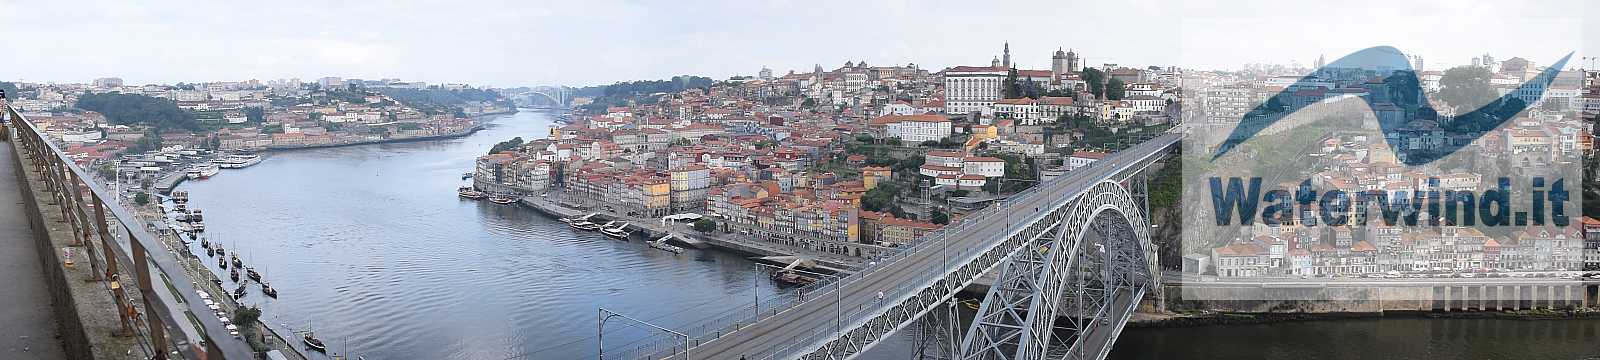 Portugal, July 2018